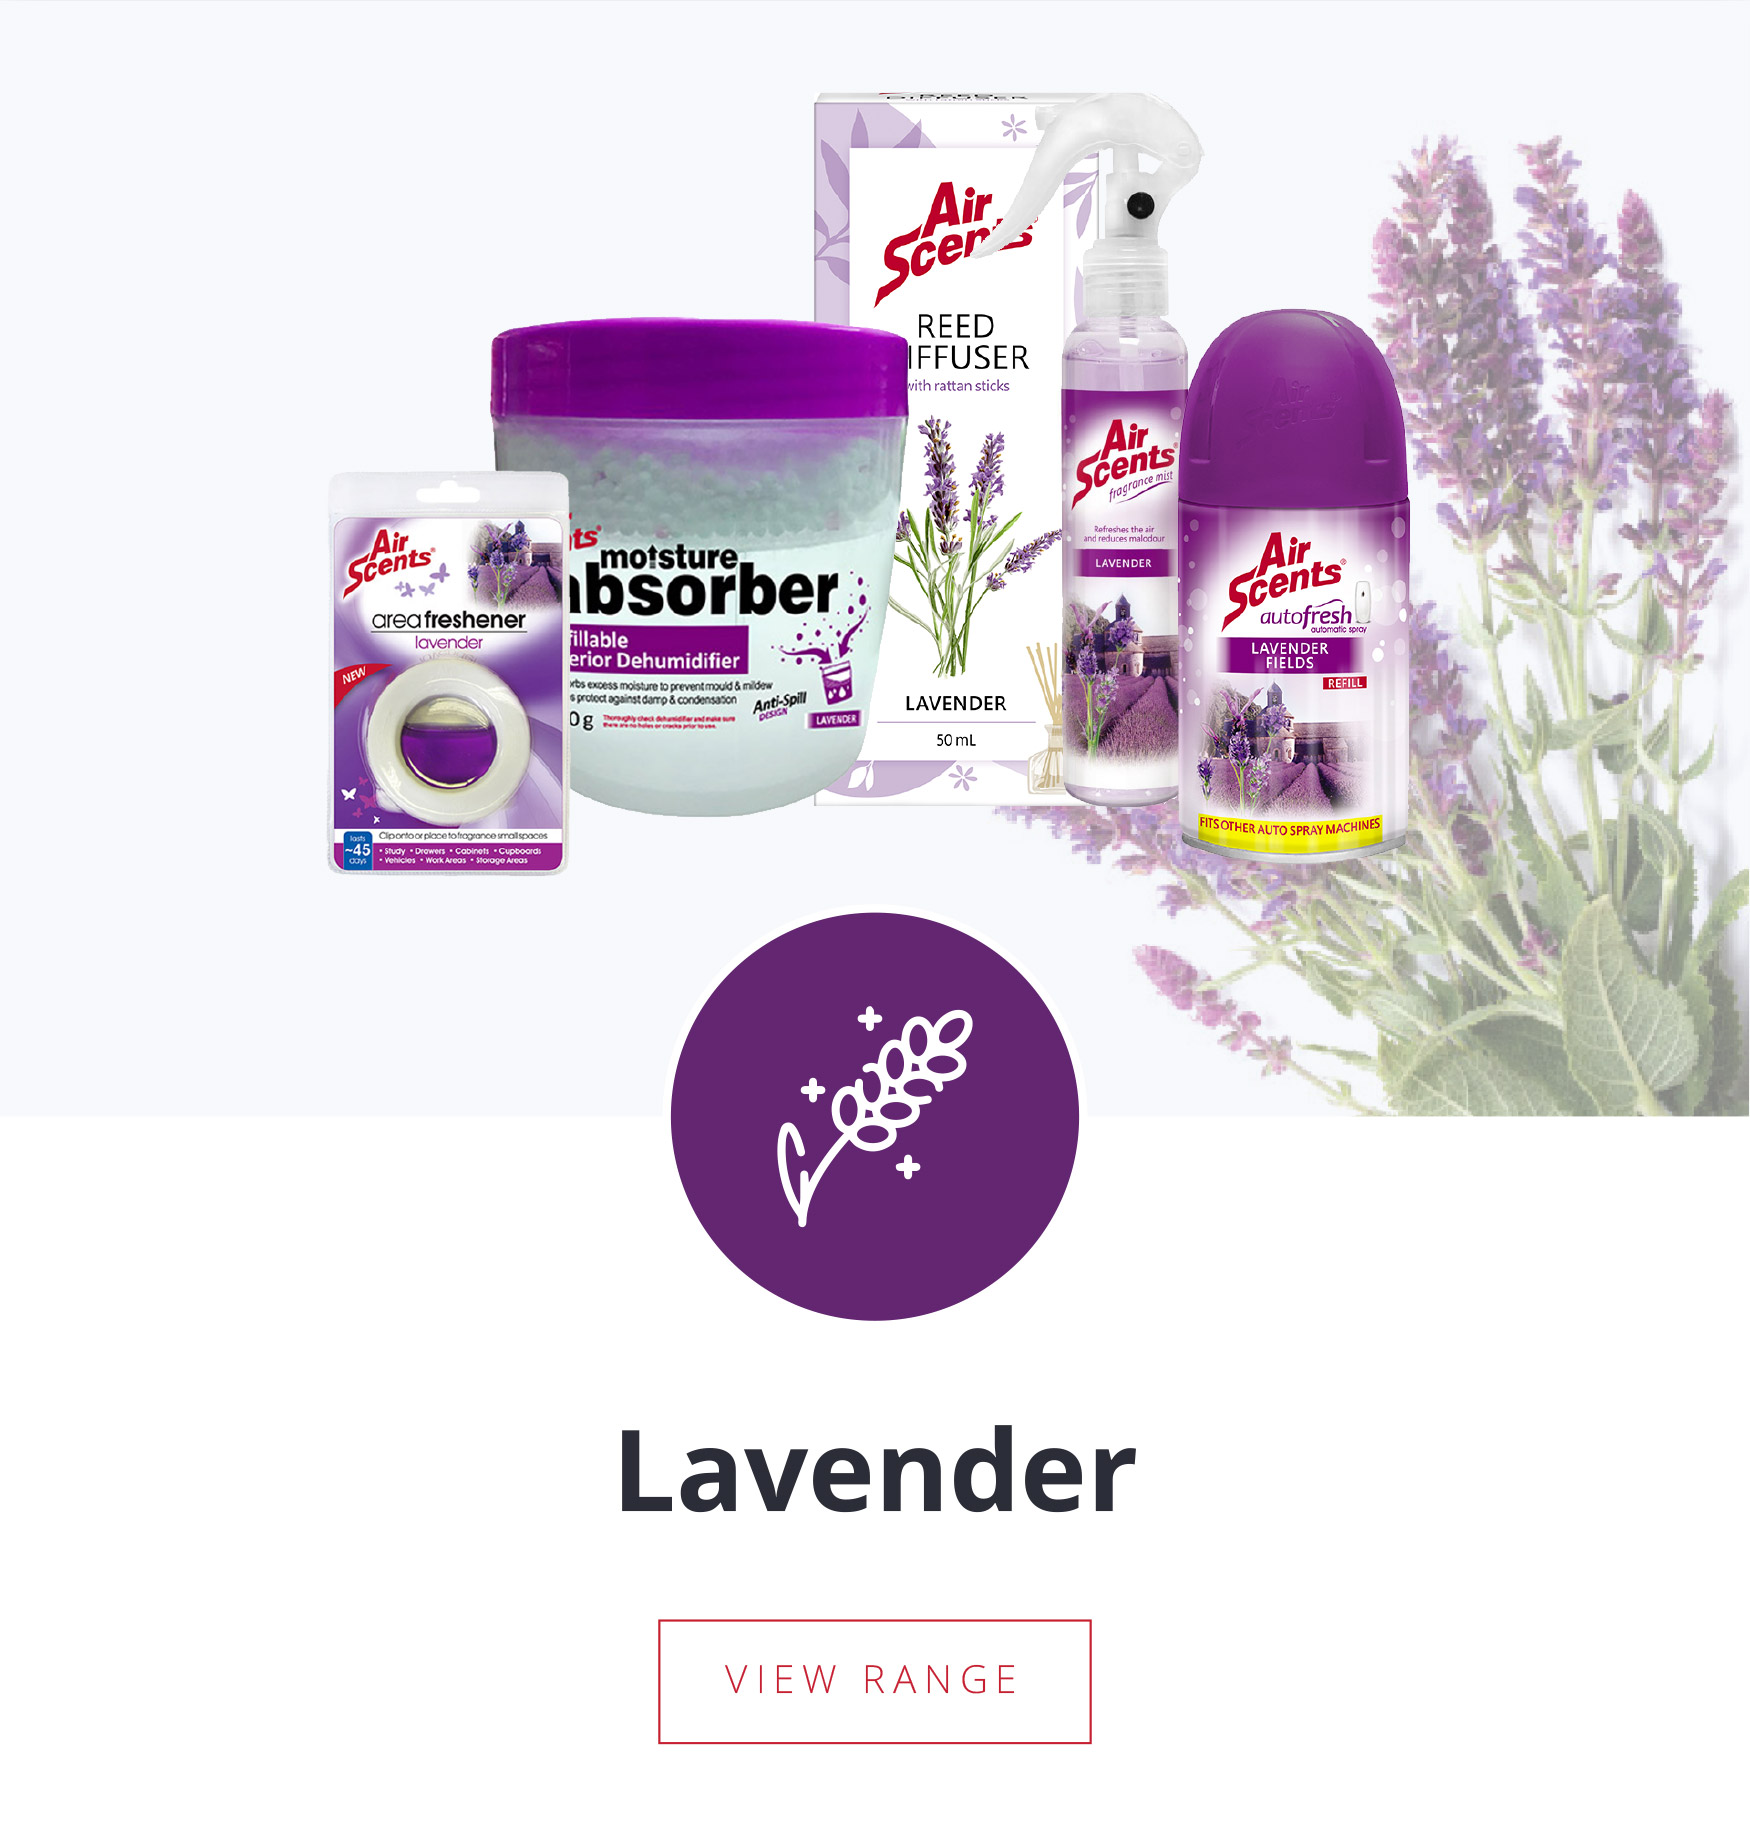 Air Scents Lavender